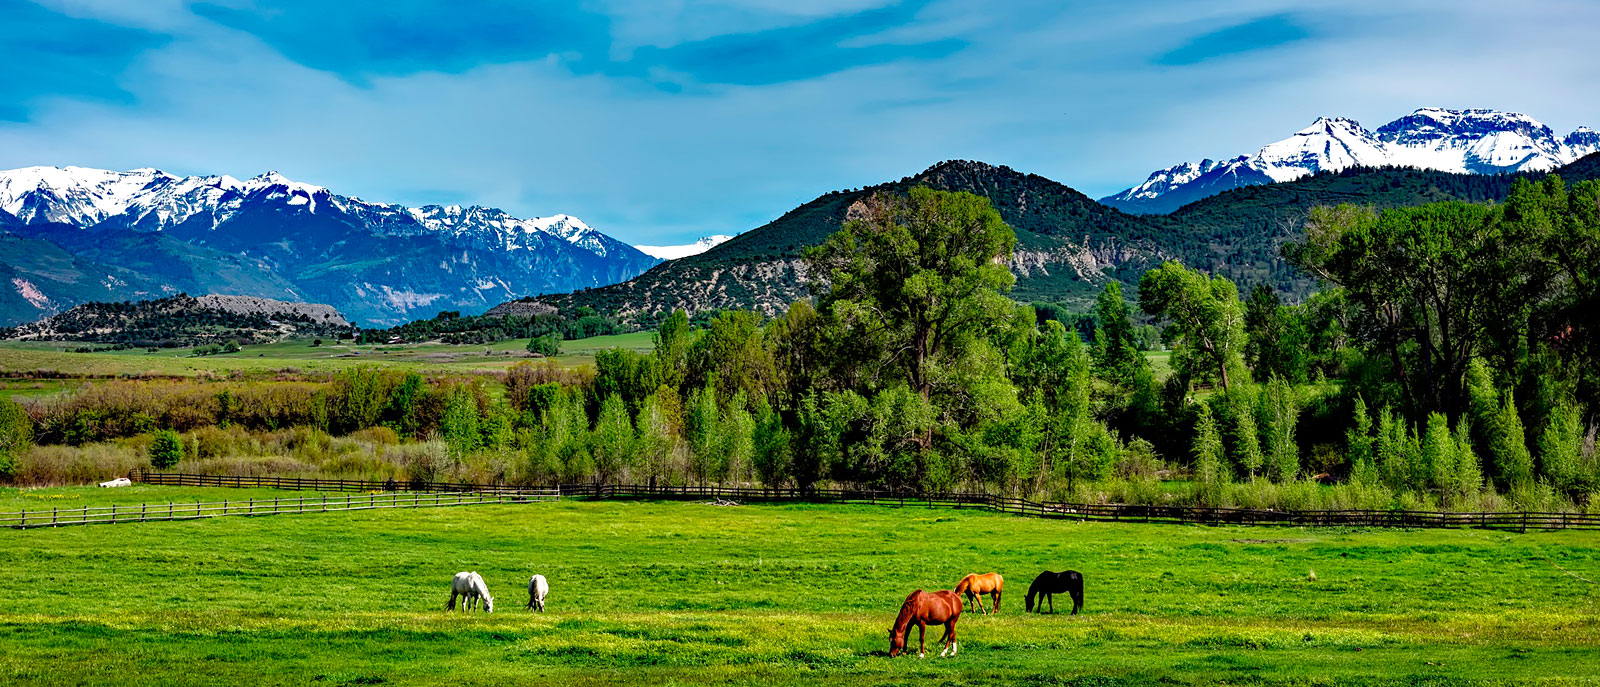 Mountainous landscape - Colorado